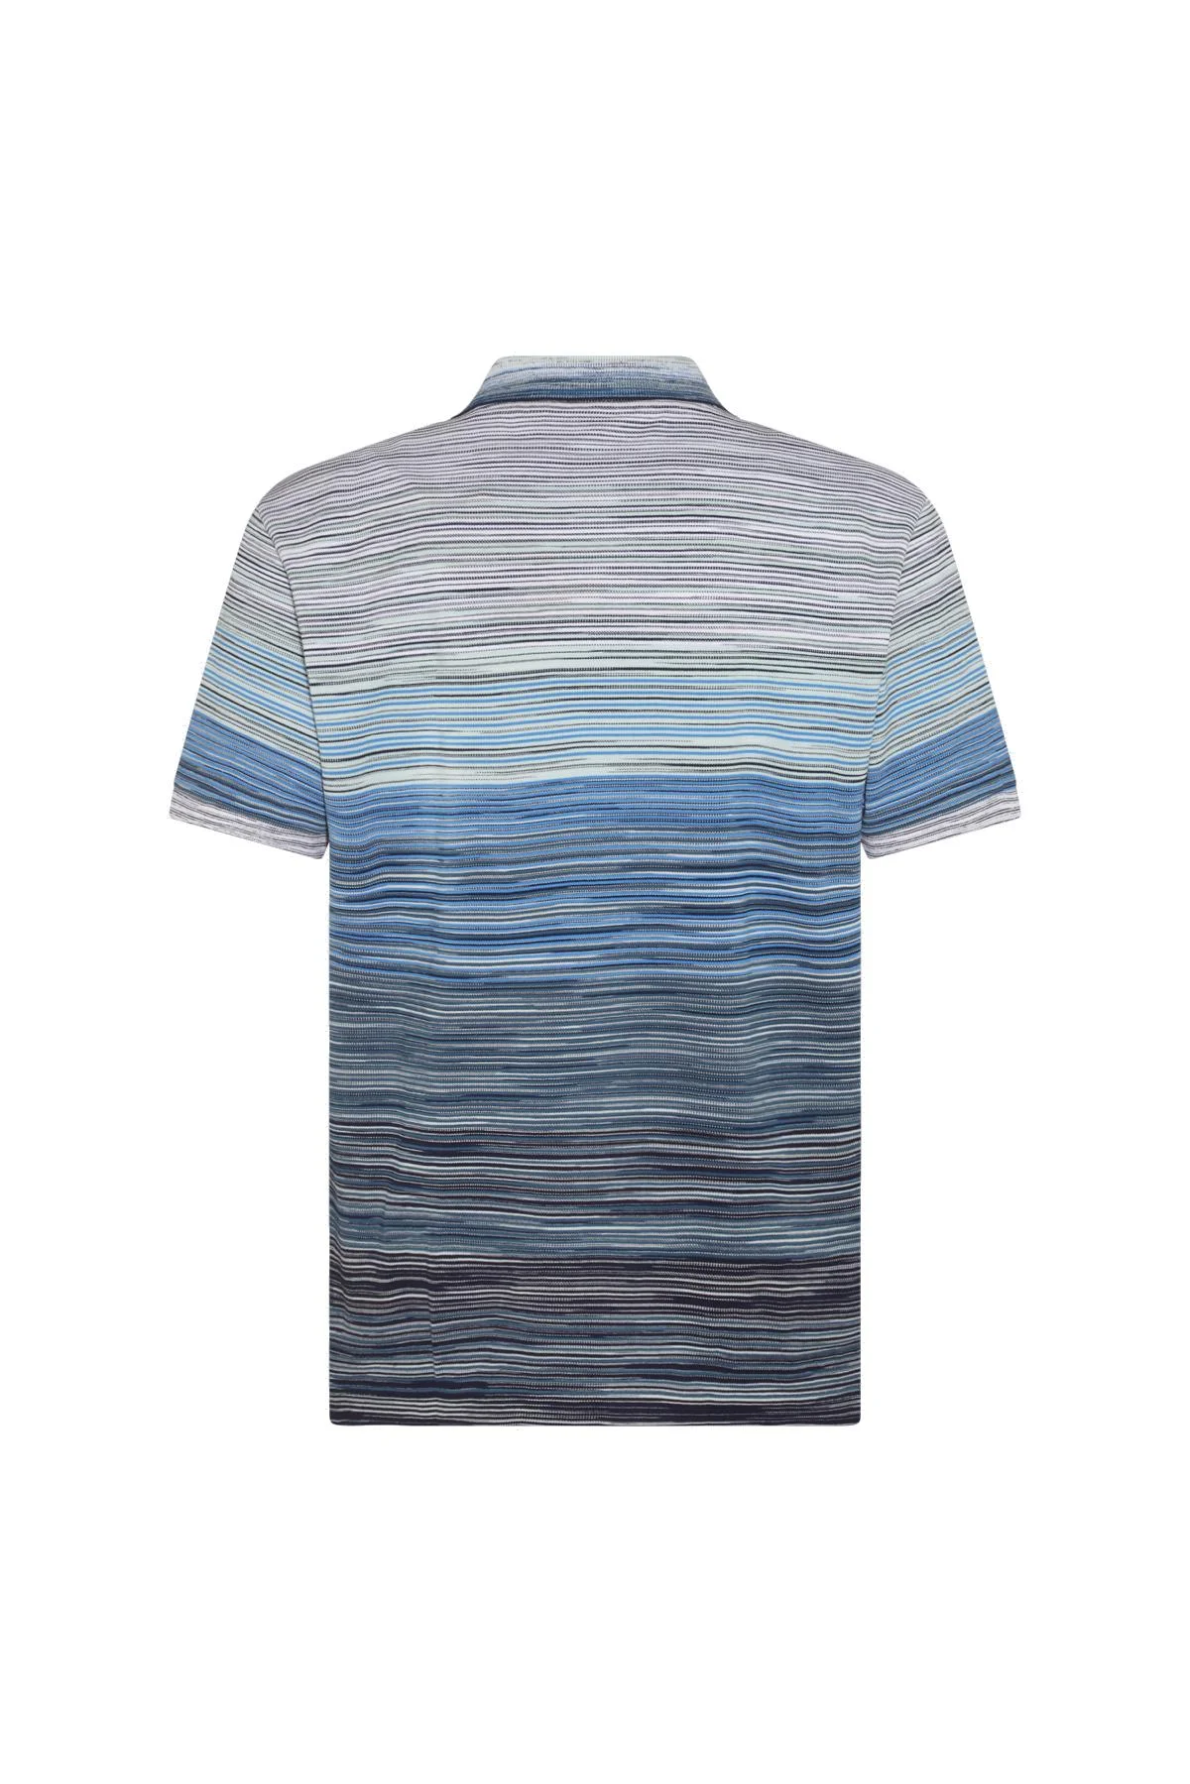 Missoni Men’s Knitted Stripe Polo Shirt Blue - Back View